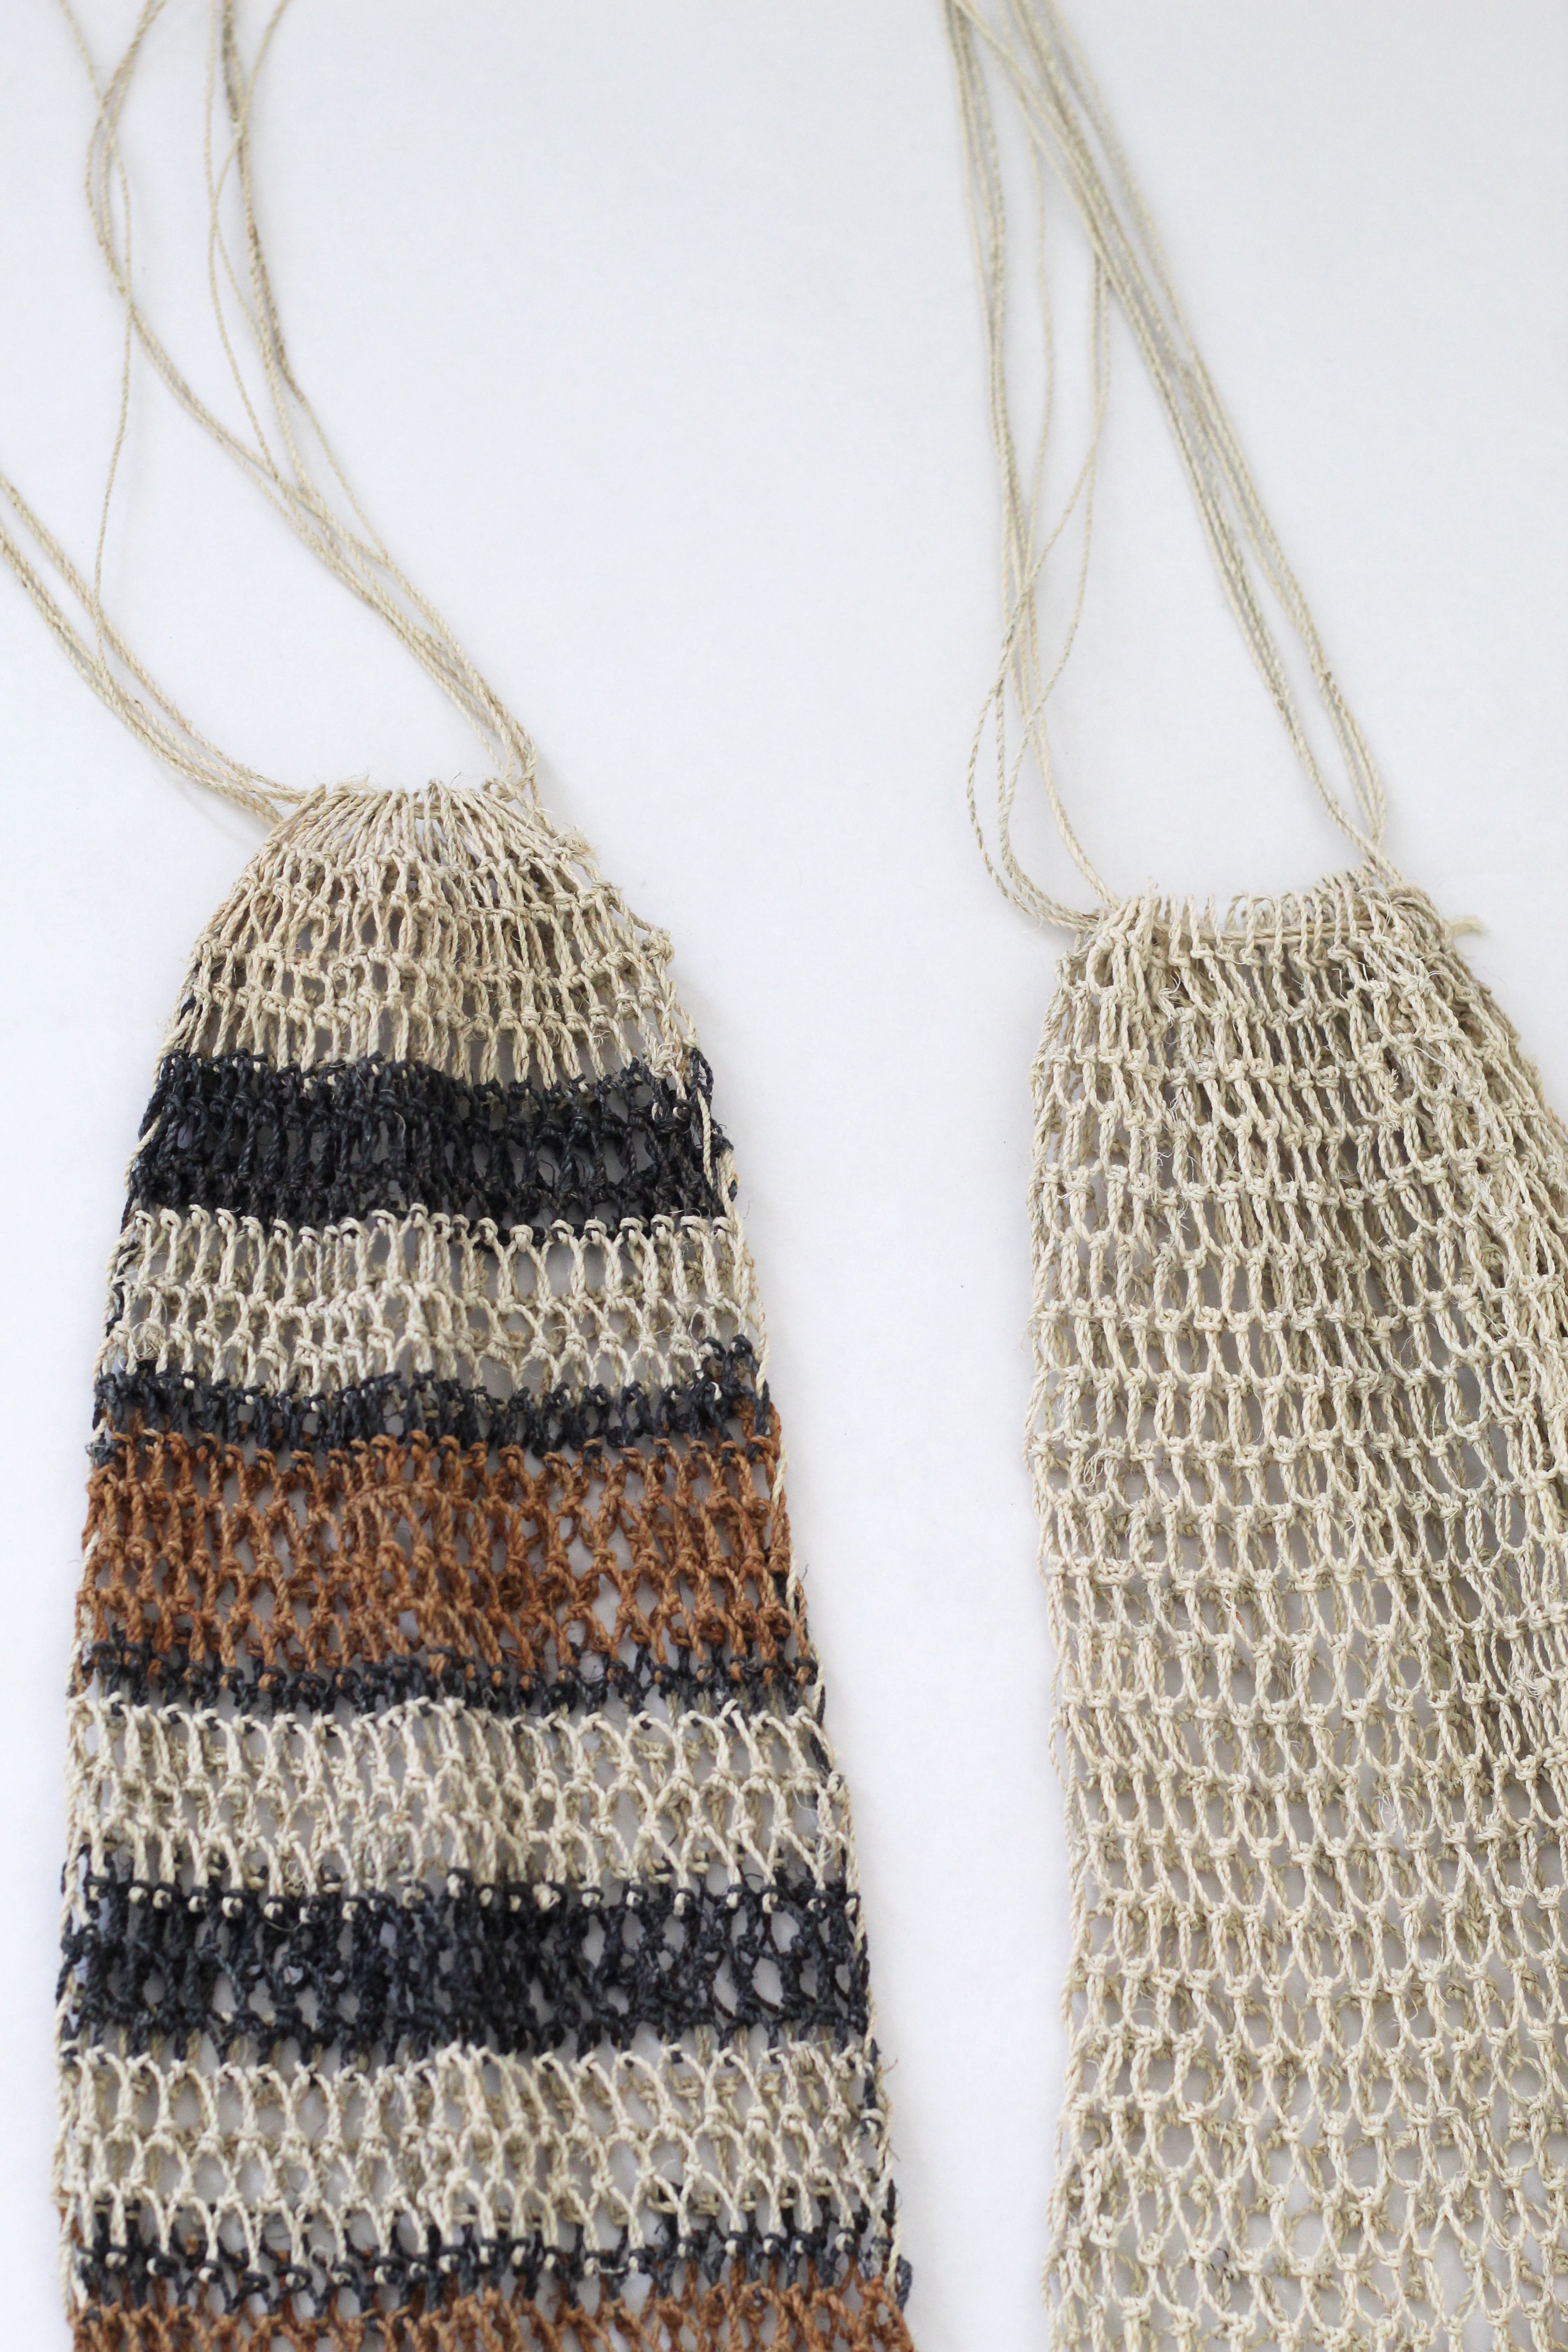 Hand woven Market Bag #014